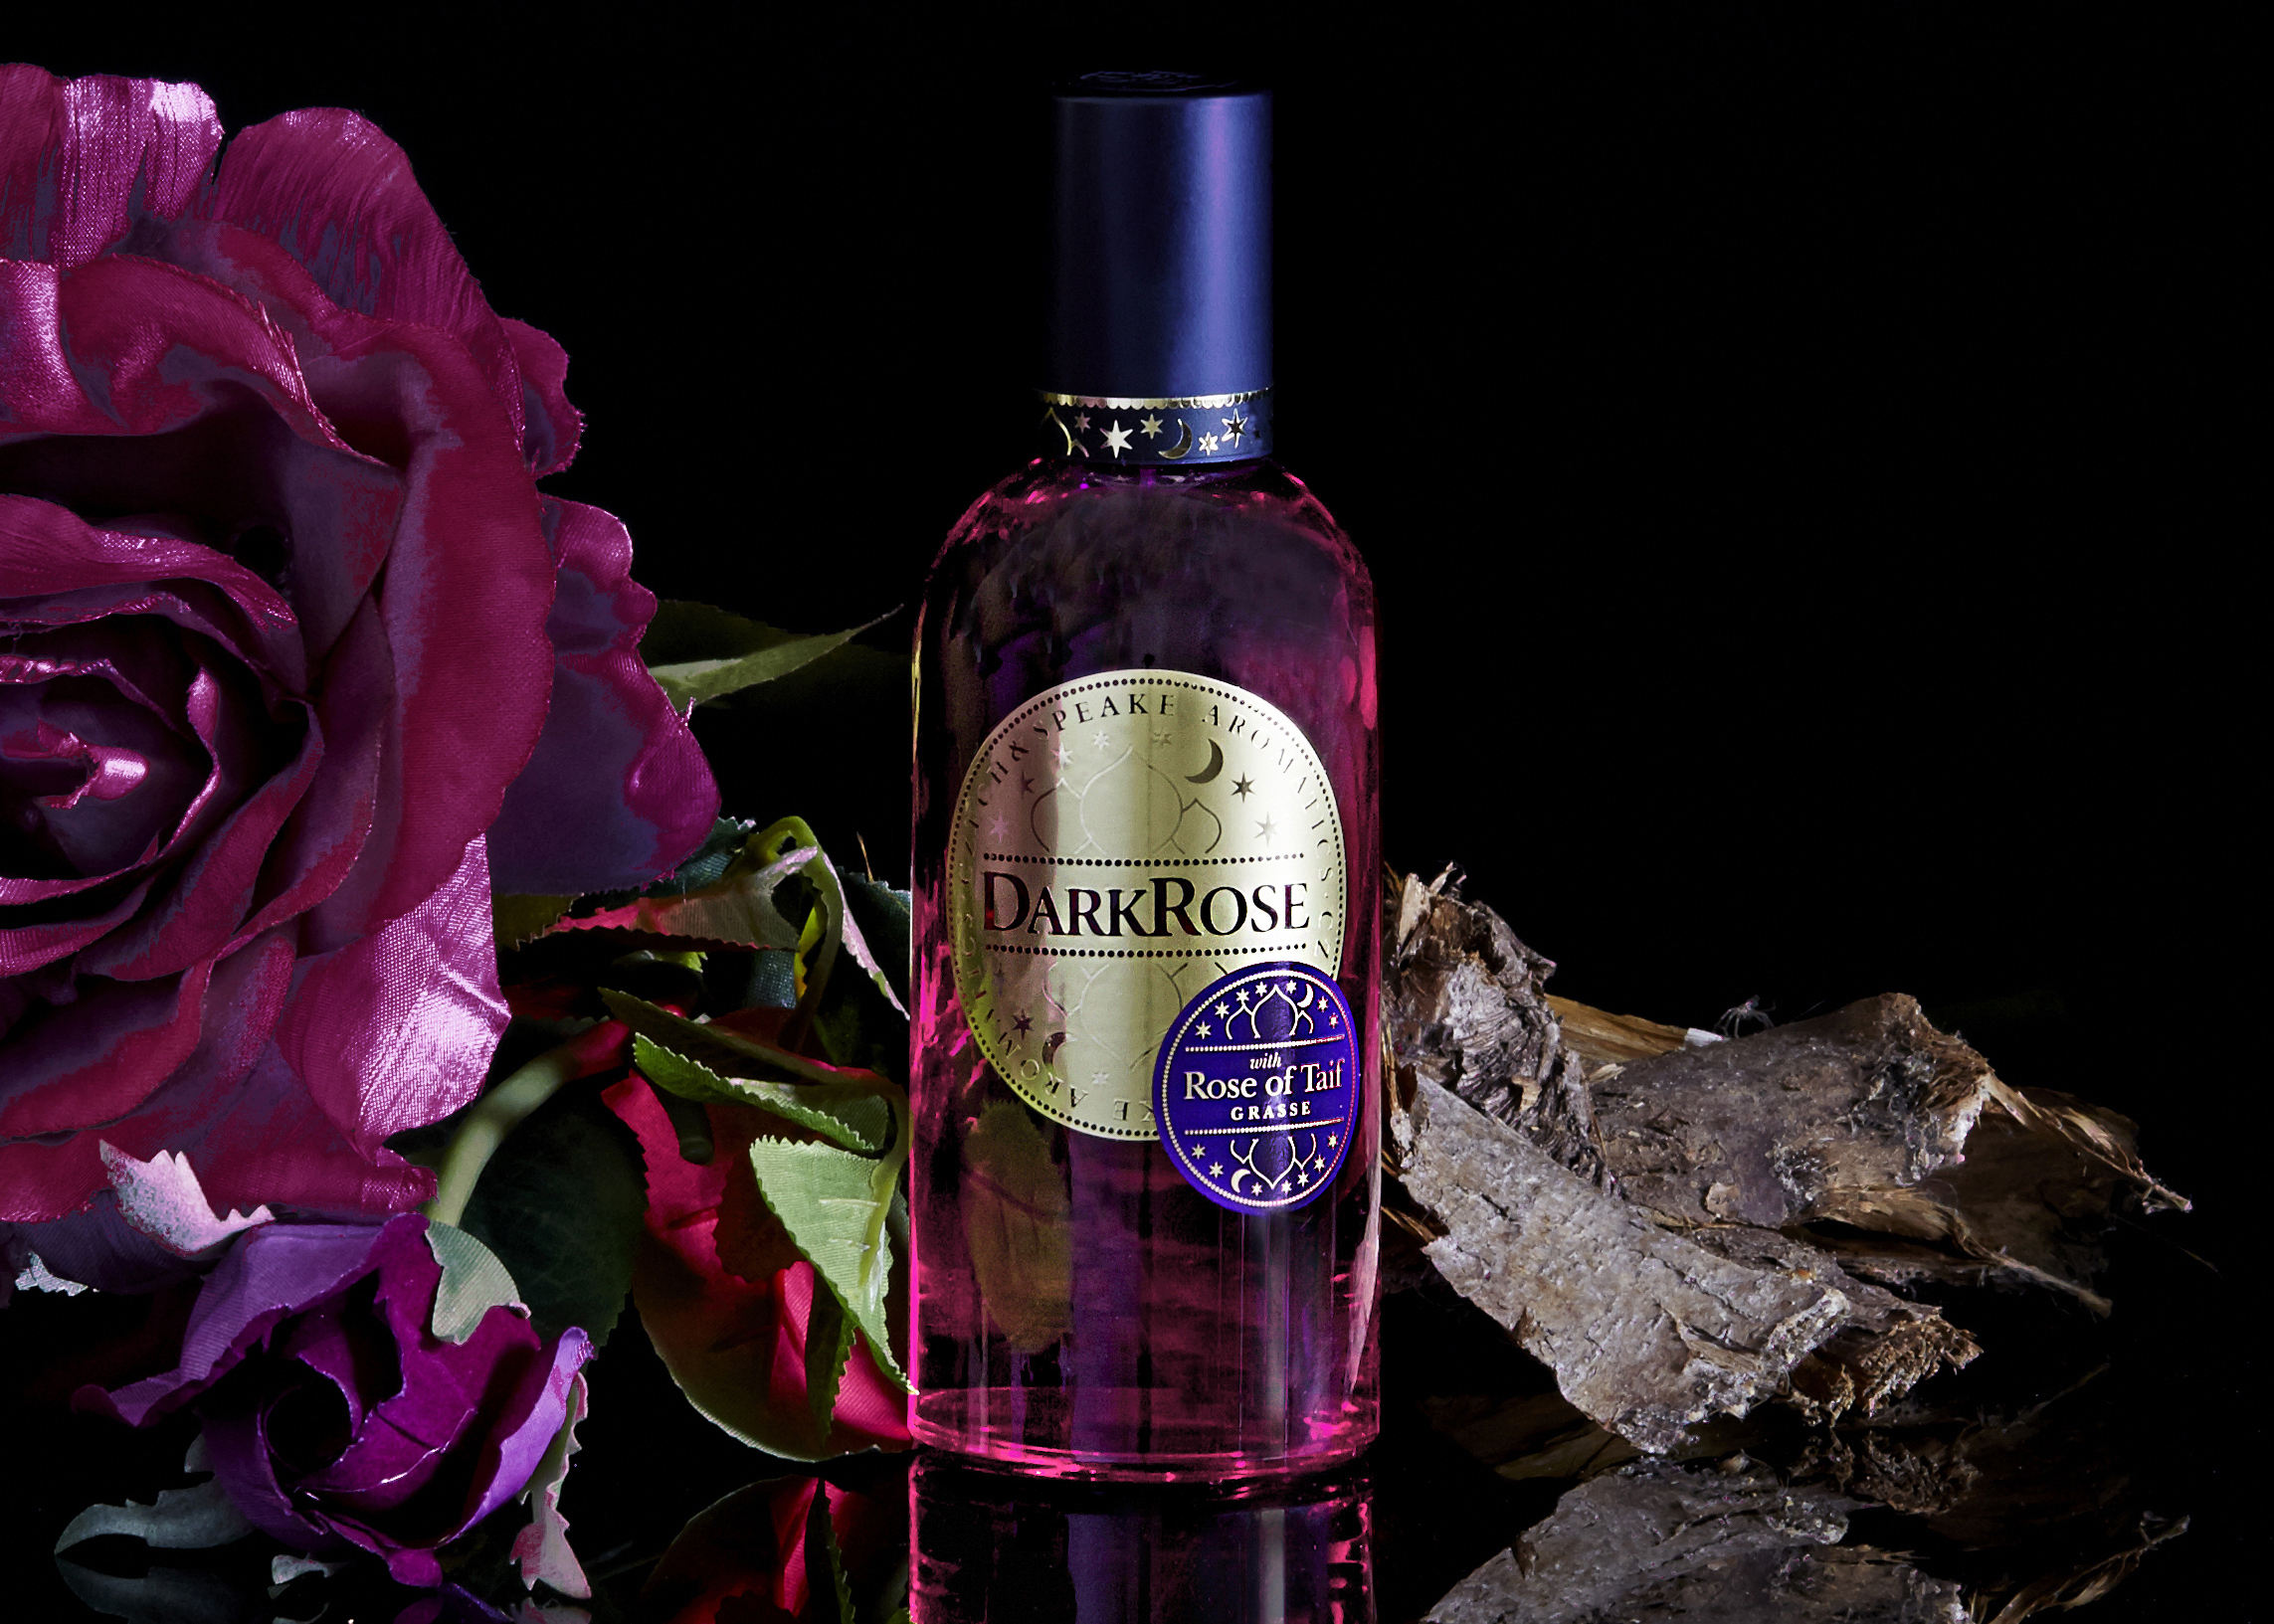 Czech &amp; Speake Dark Rose on black with pink rose and bark.